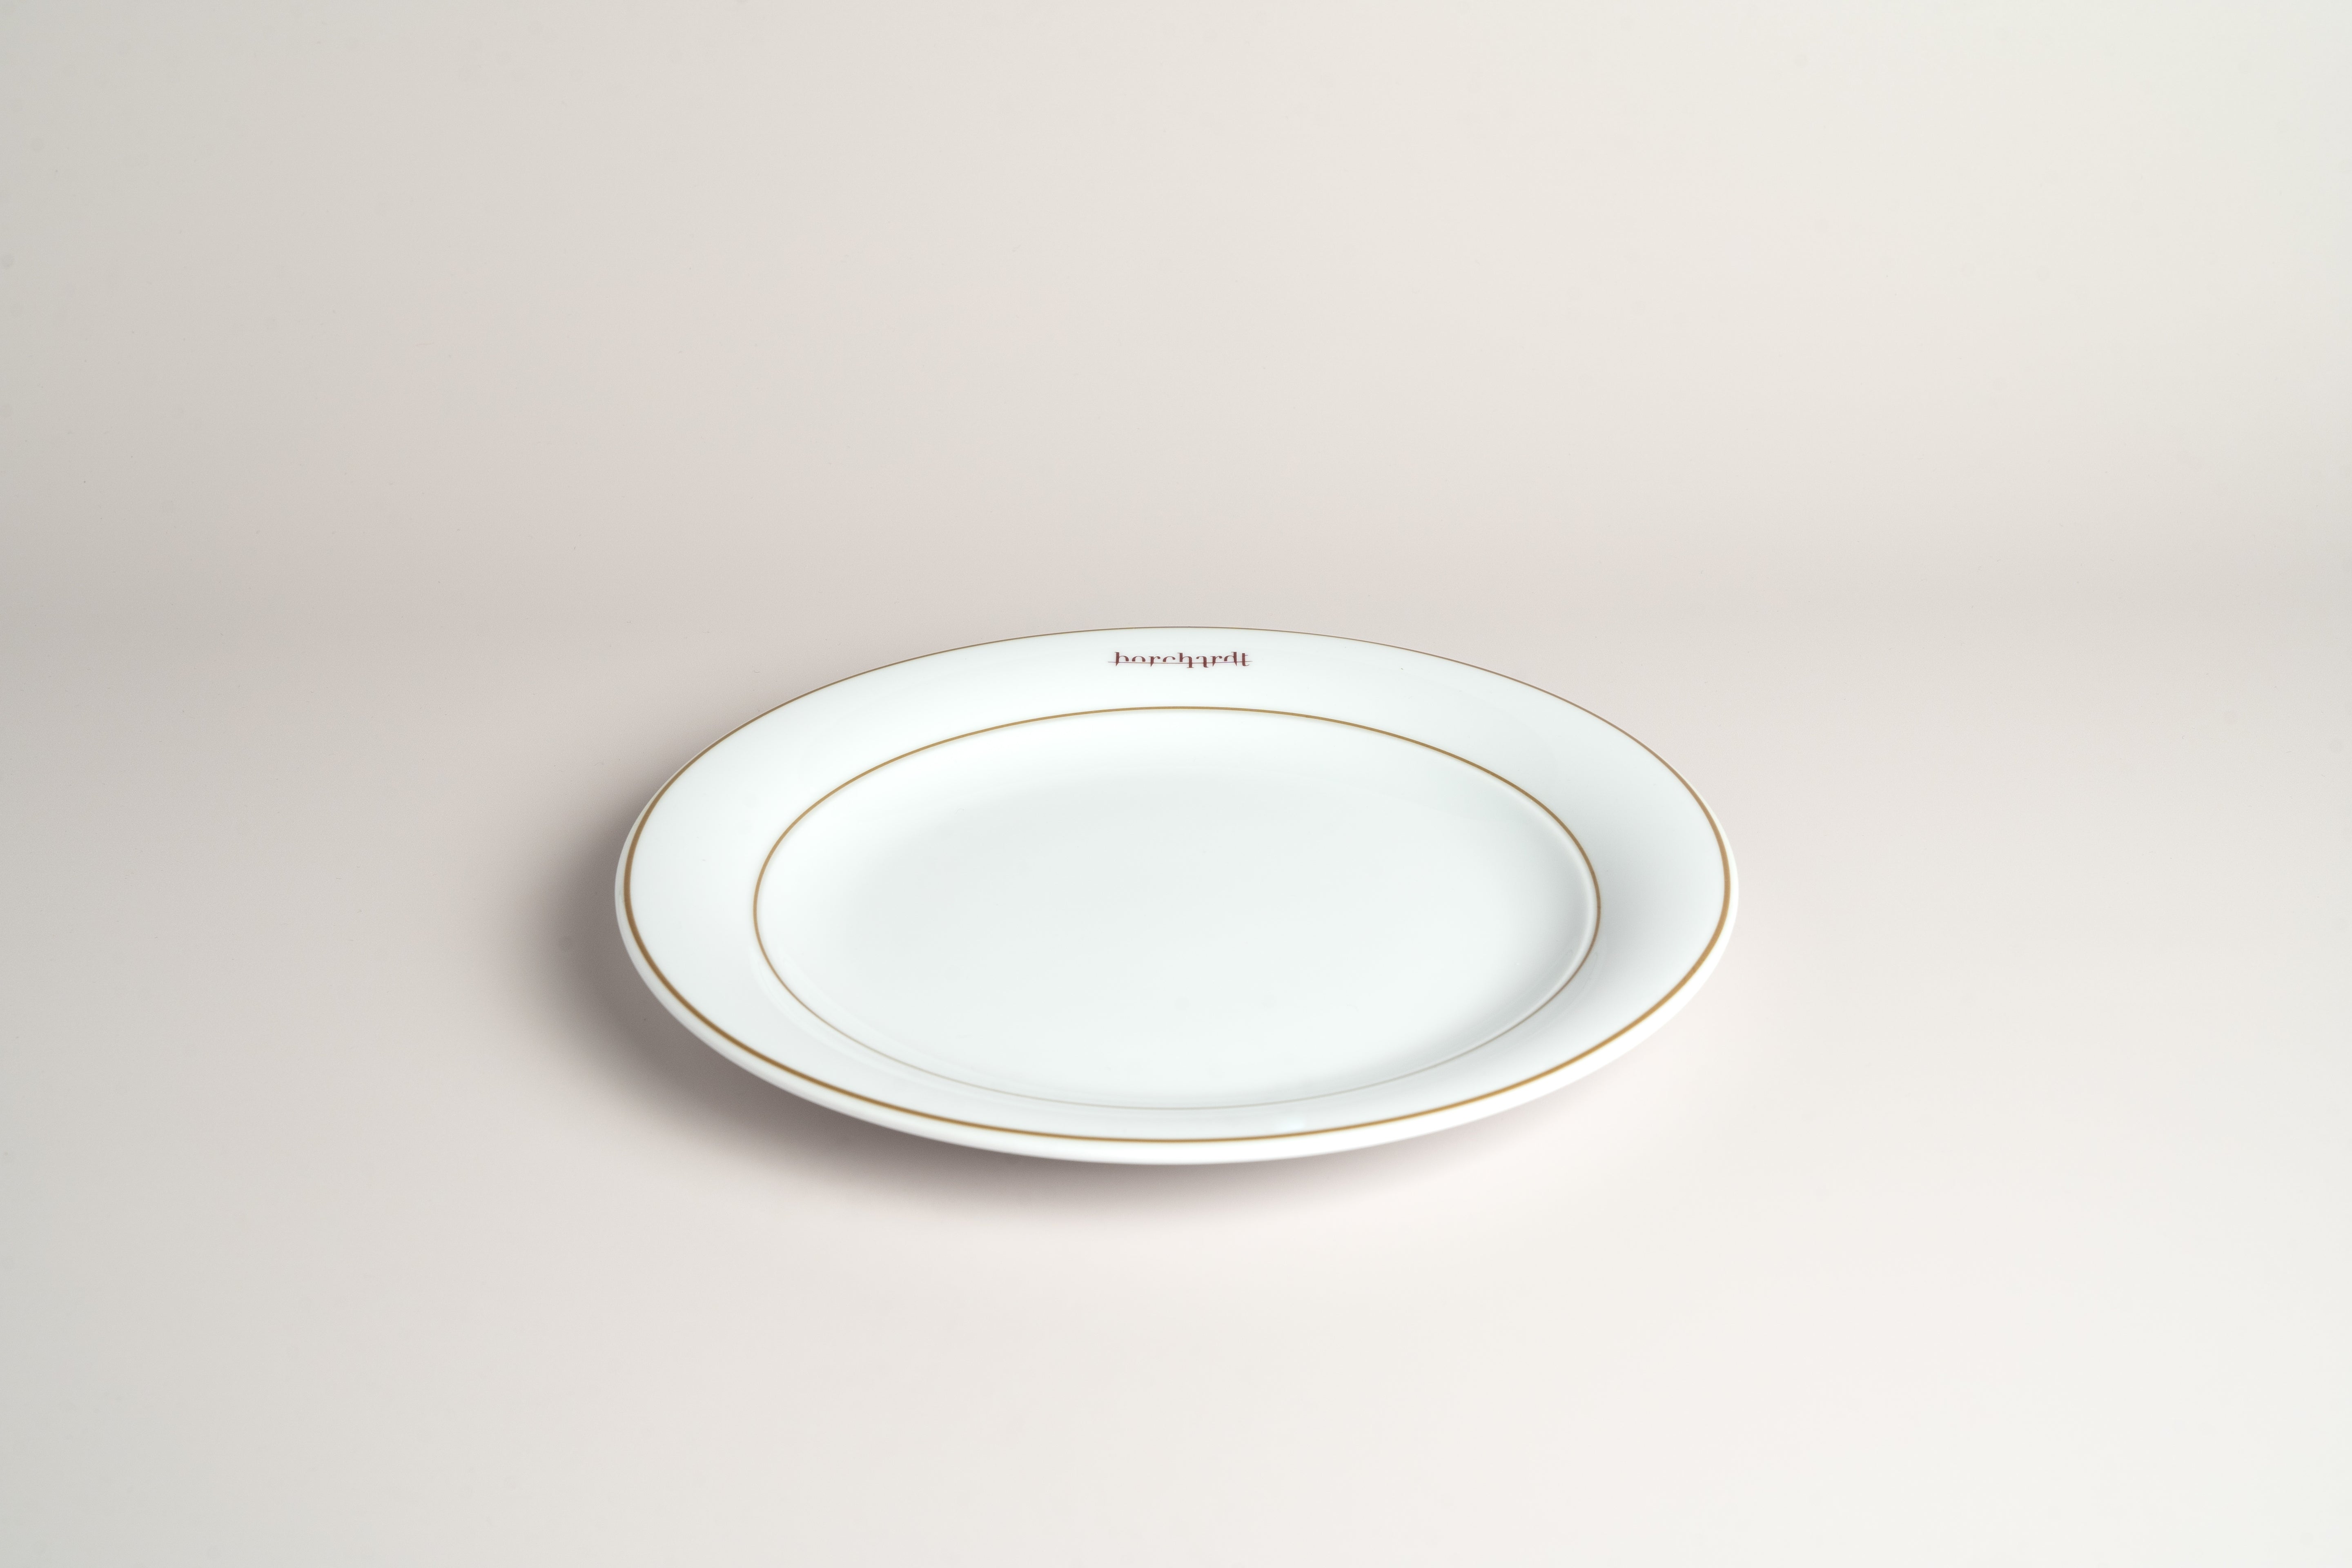 borchardt starter plate - large, 25 cm